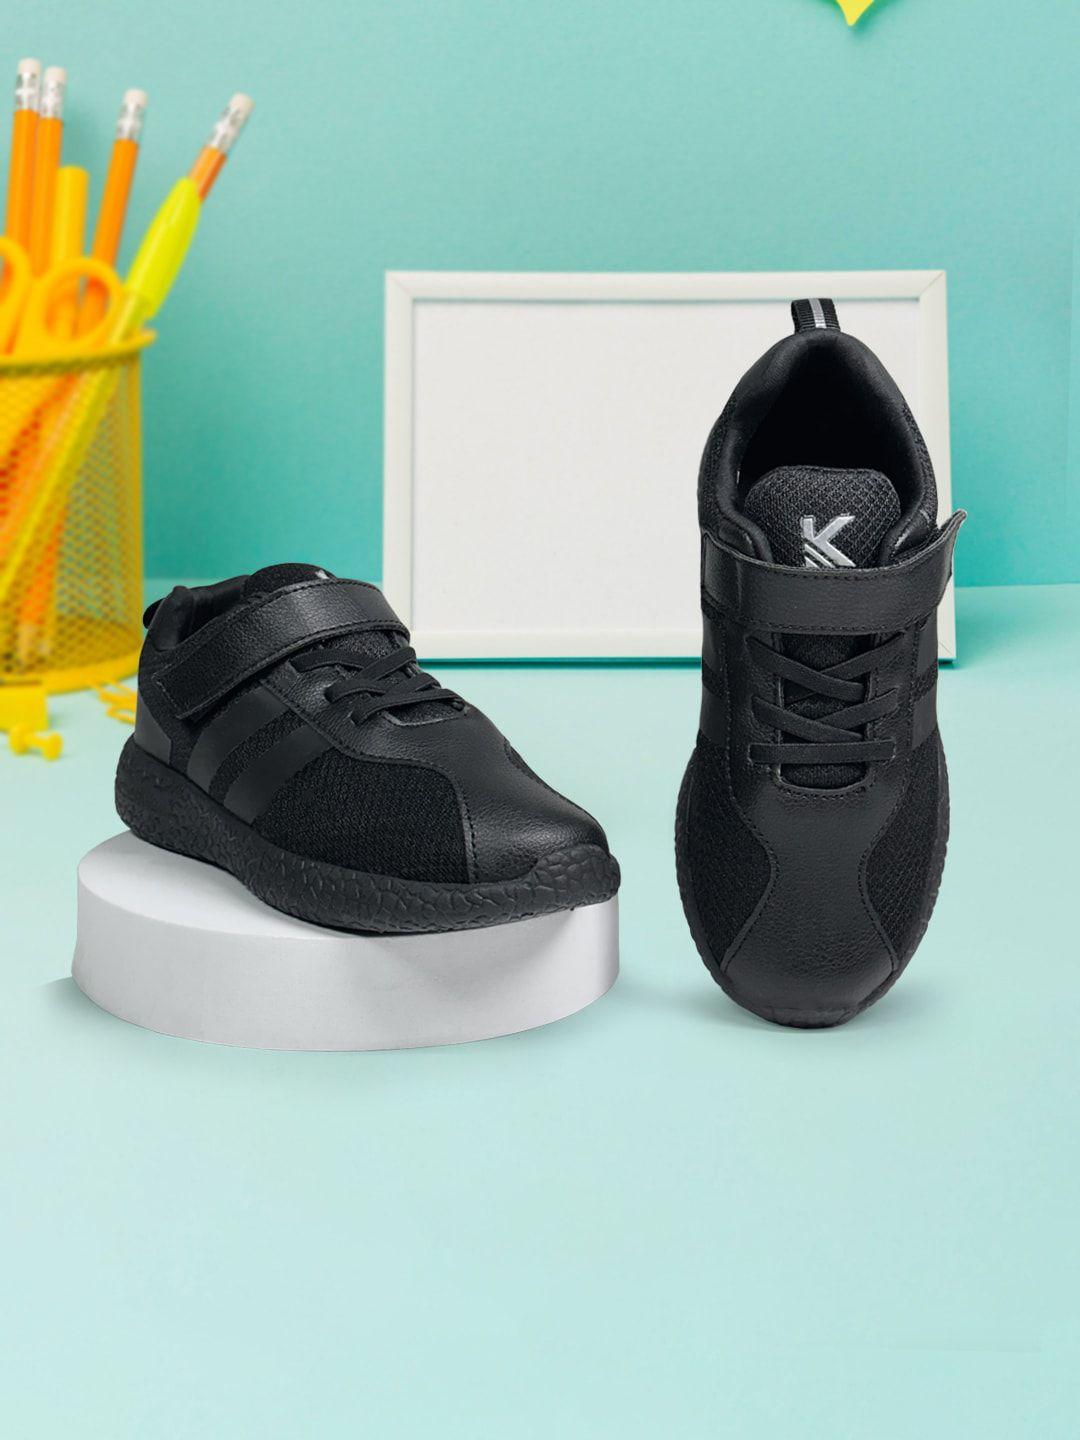 kazarmax unisex kids round toe velcro woven design sneakers